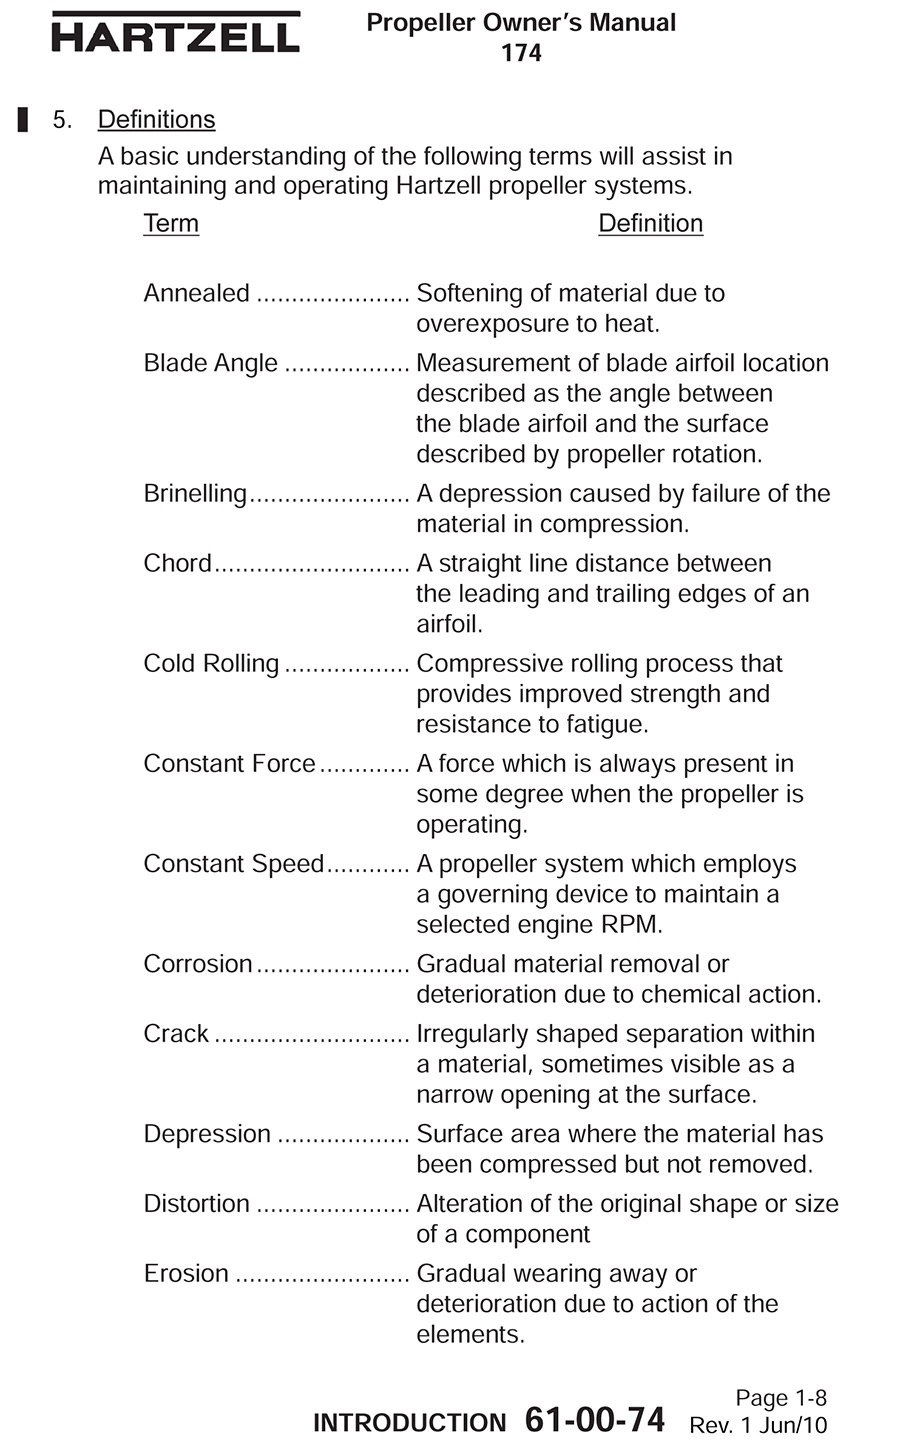 Hartzell Prop Manual 2010 page34